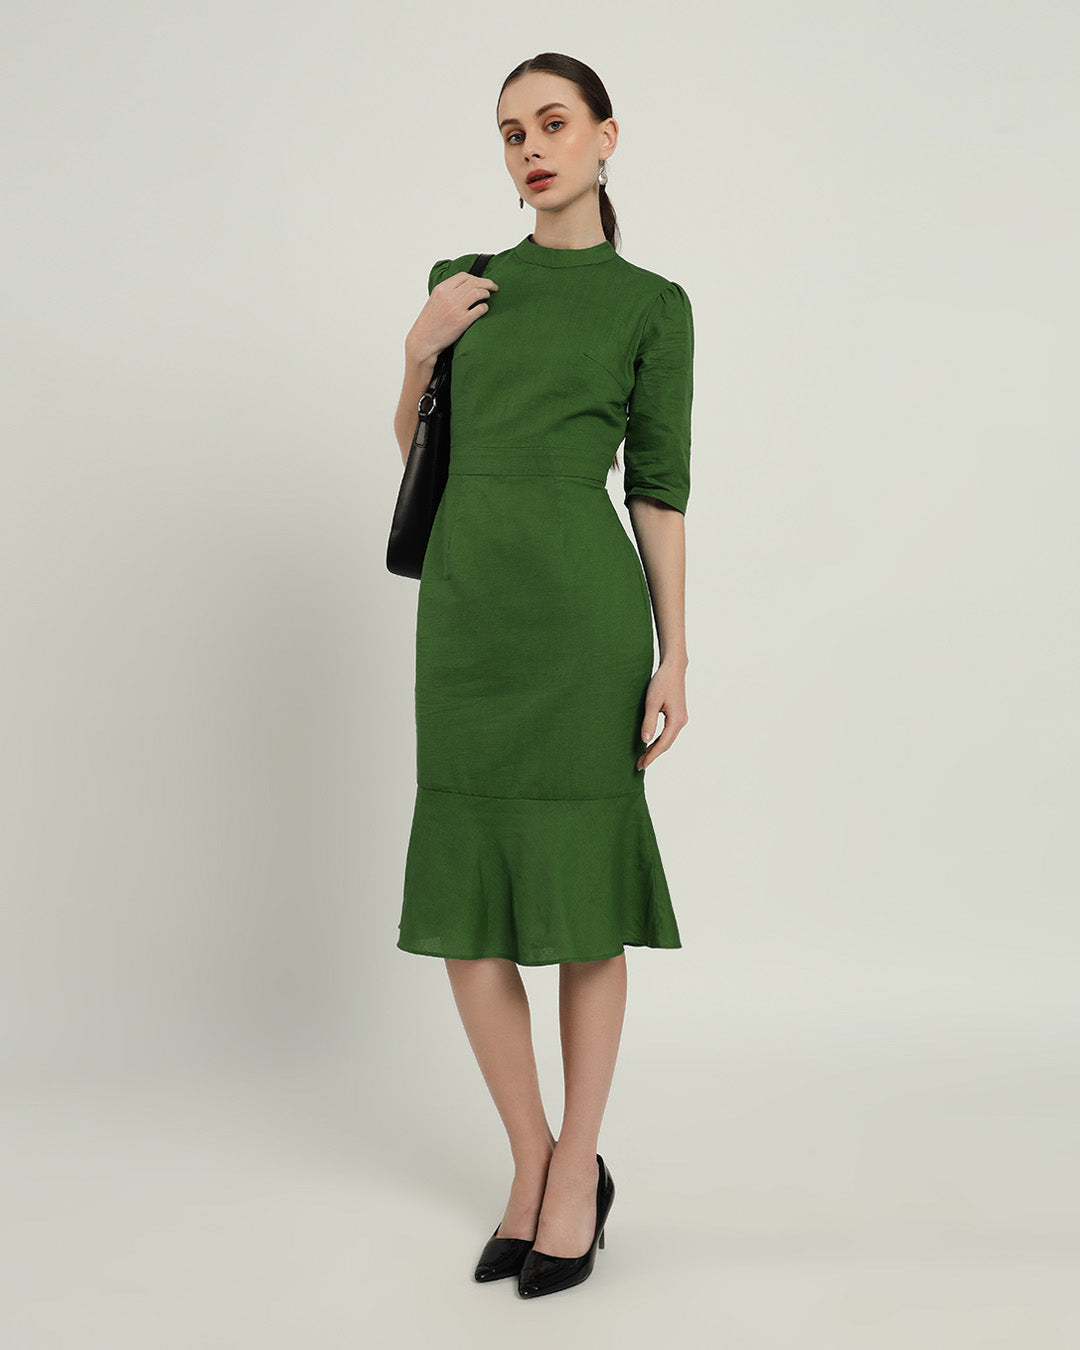 The Charlotte Emerald Dress